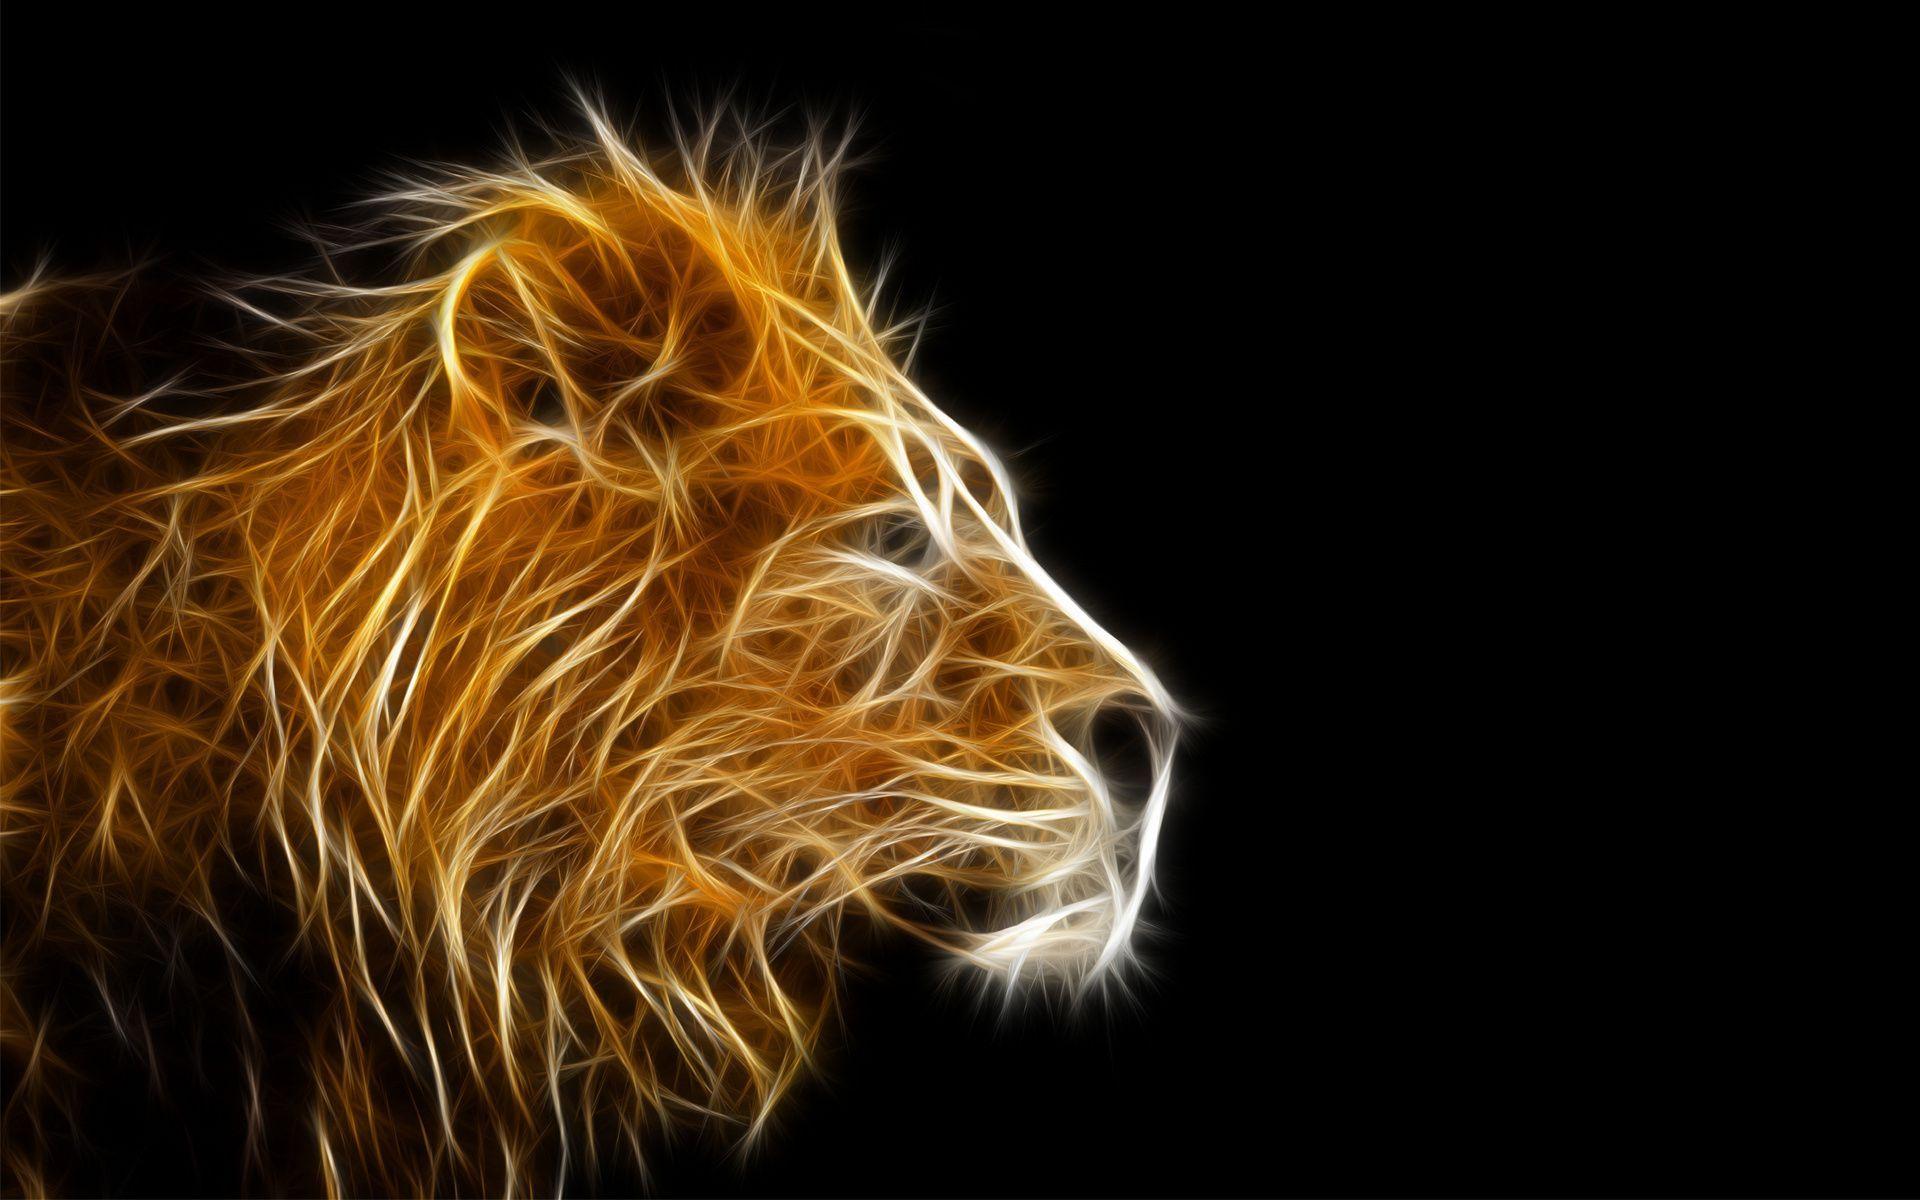 Image for 3D Lion Wallpaper HD Desktop and Mac. GuhPix Gallery